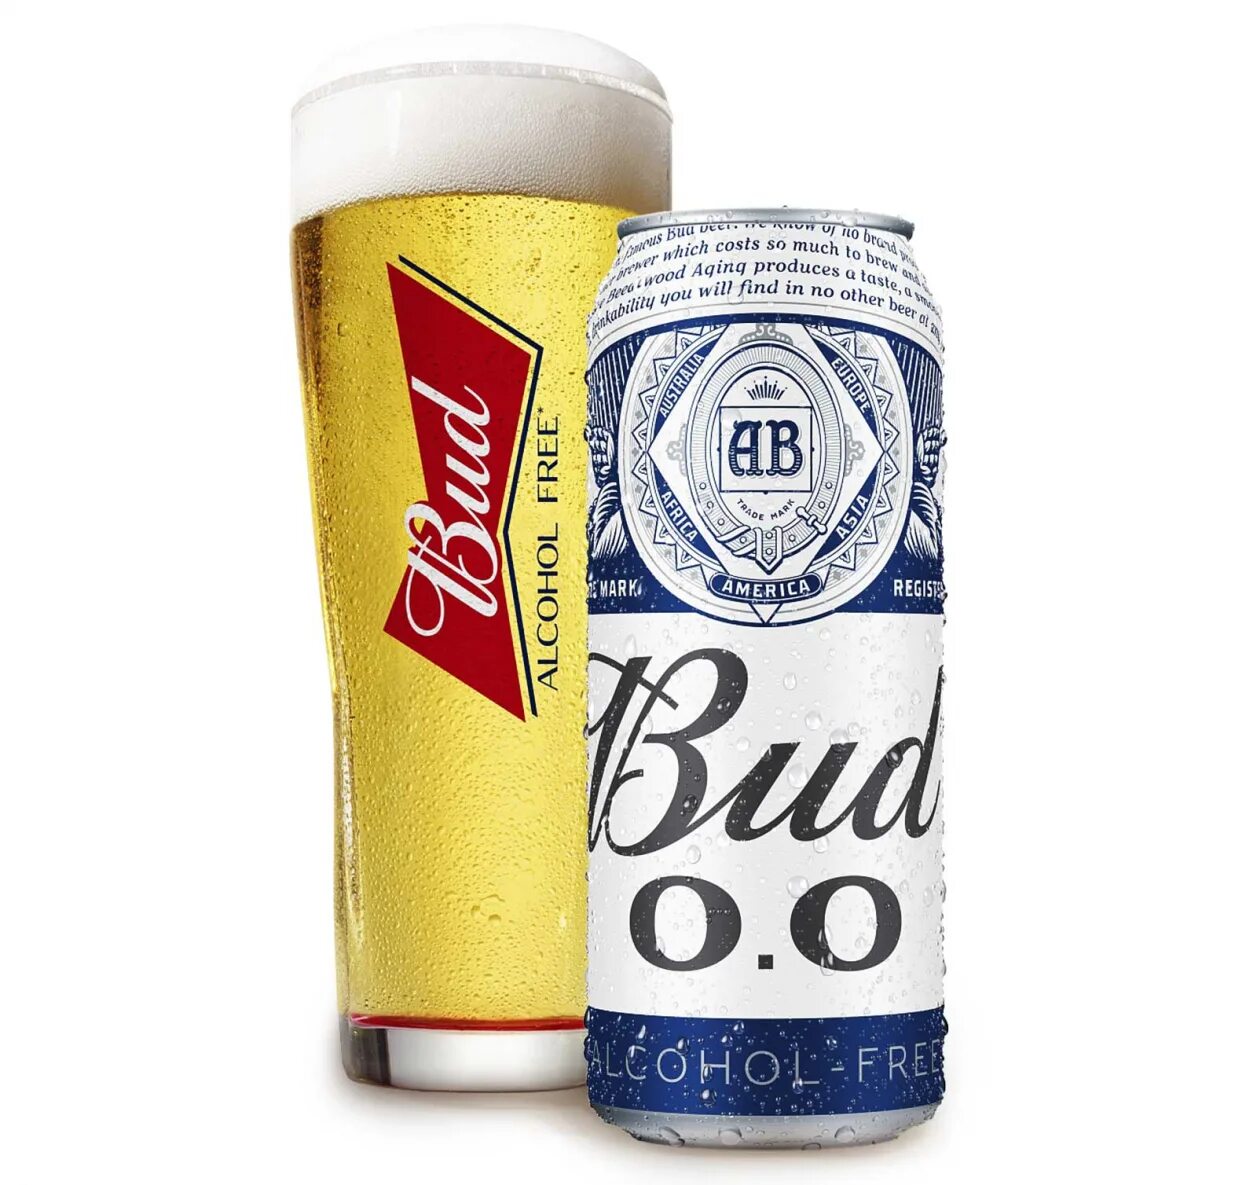 Пивной напиток БАД Б/А 0.45Л Ж/Б. Пивной напиток БАД безалкогольный 0,45л ж/б. Пиво БАД жб 0.45. Пиво БАД Б/А 0,45 жб 0%. Пиво ж б 0.5